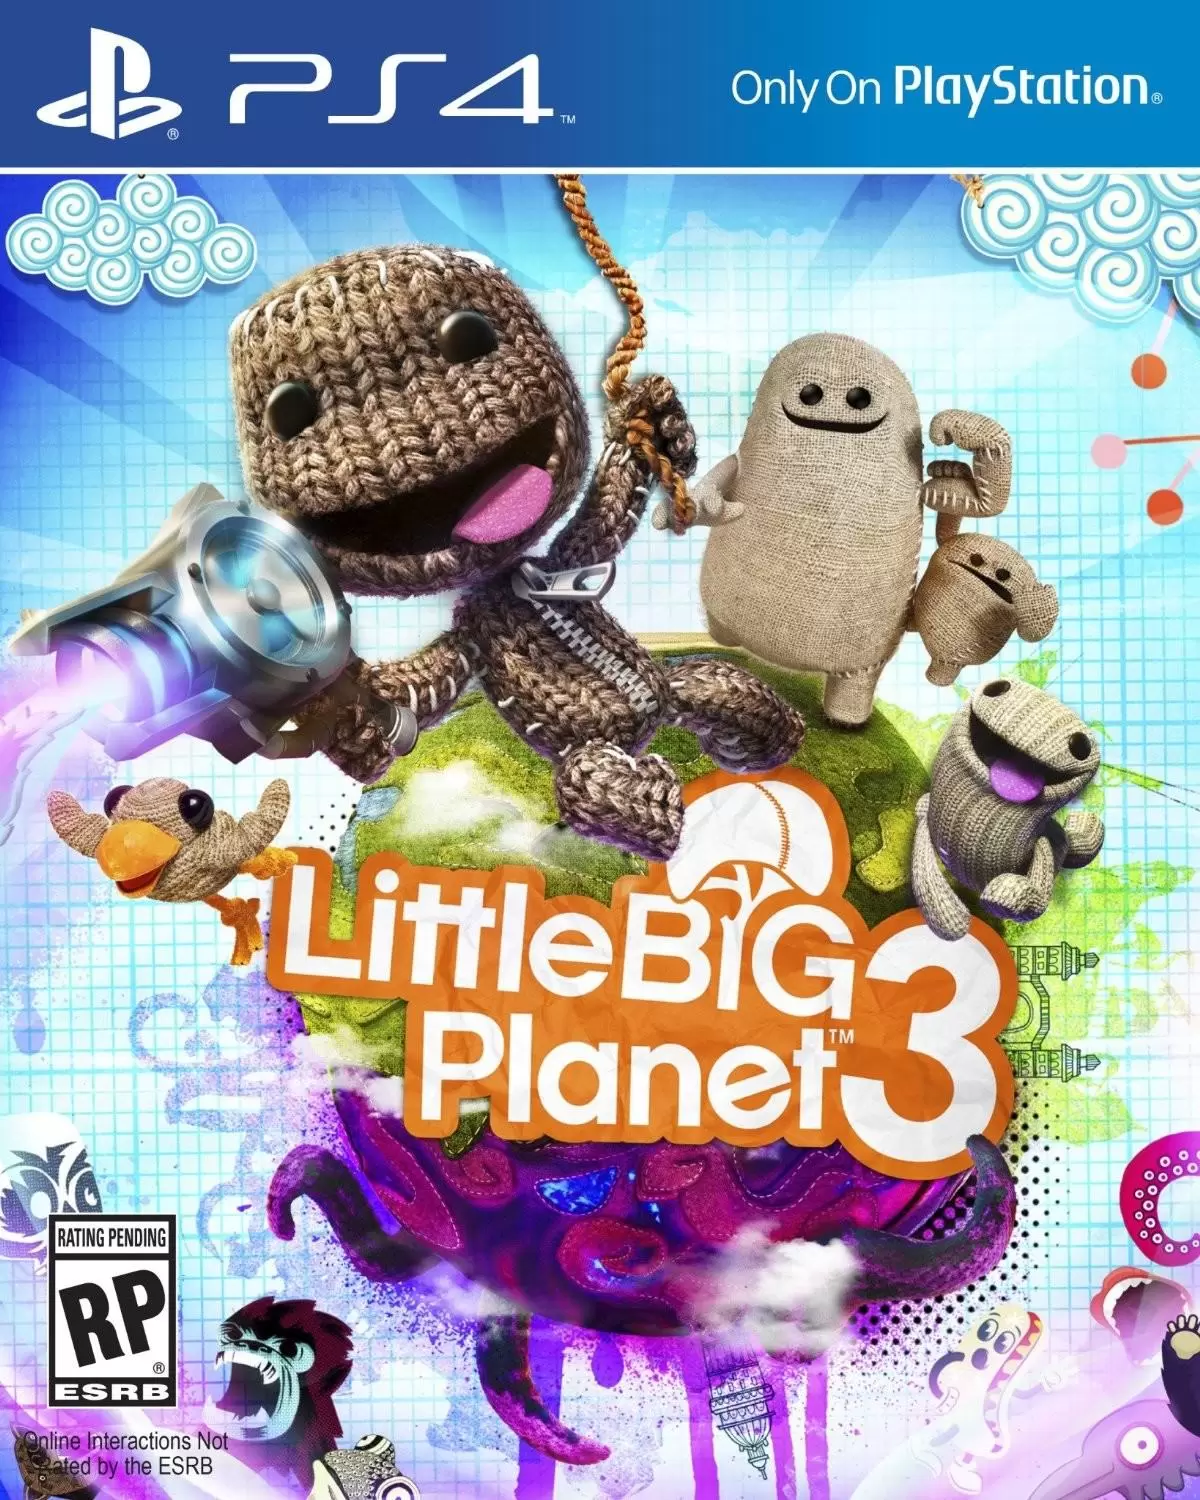 PS4 Games - Little Big Planet 3